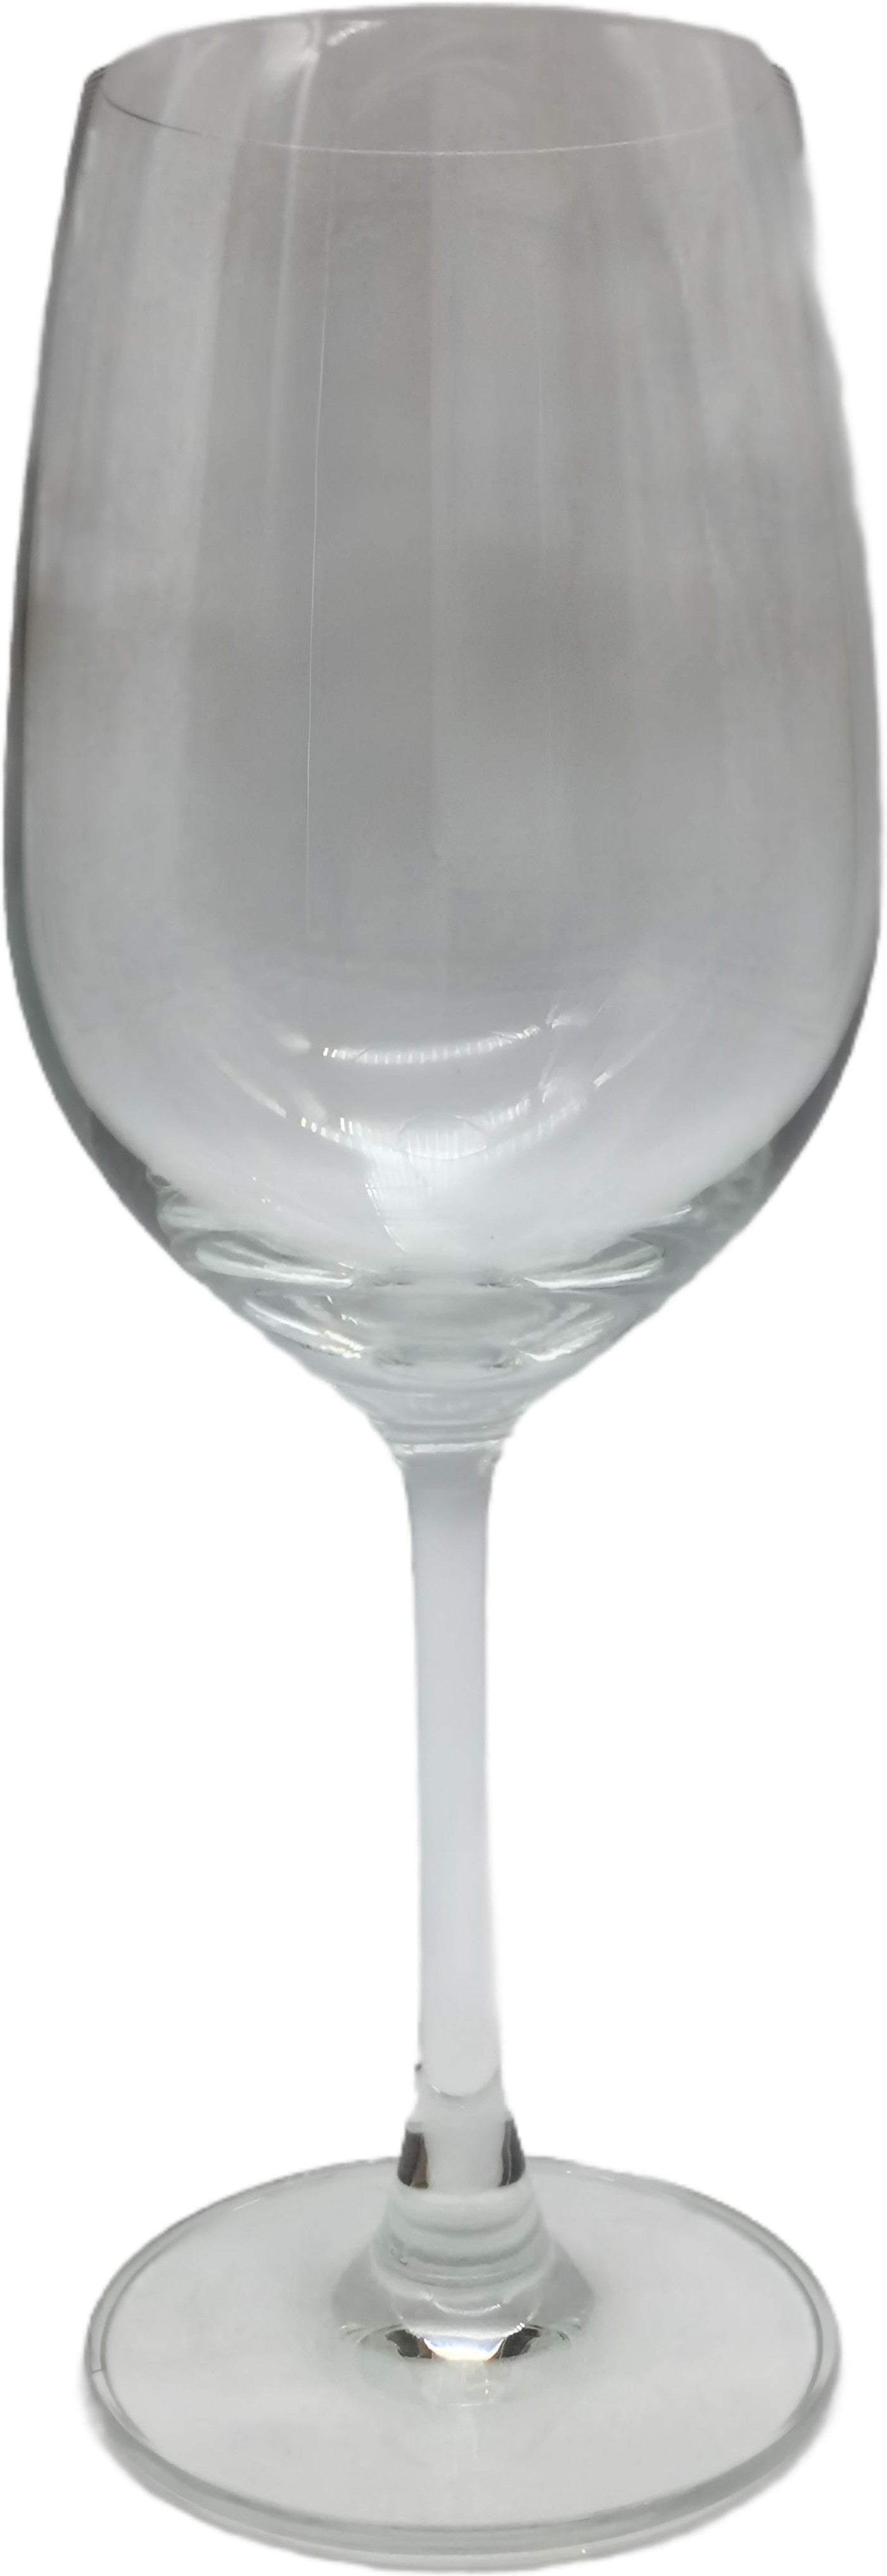 Dart Container - 5 Oz Wine Glass, 12 PC - PW5C12-0090